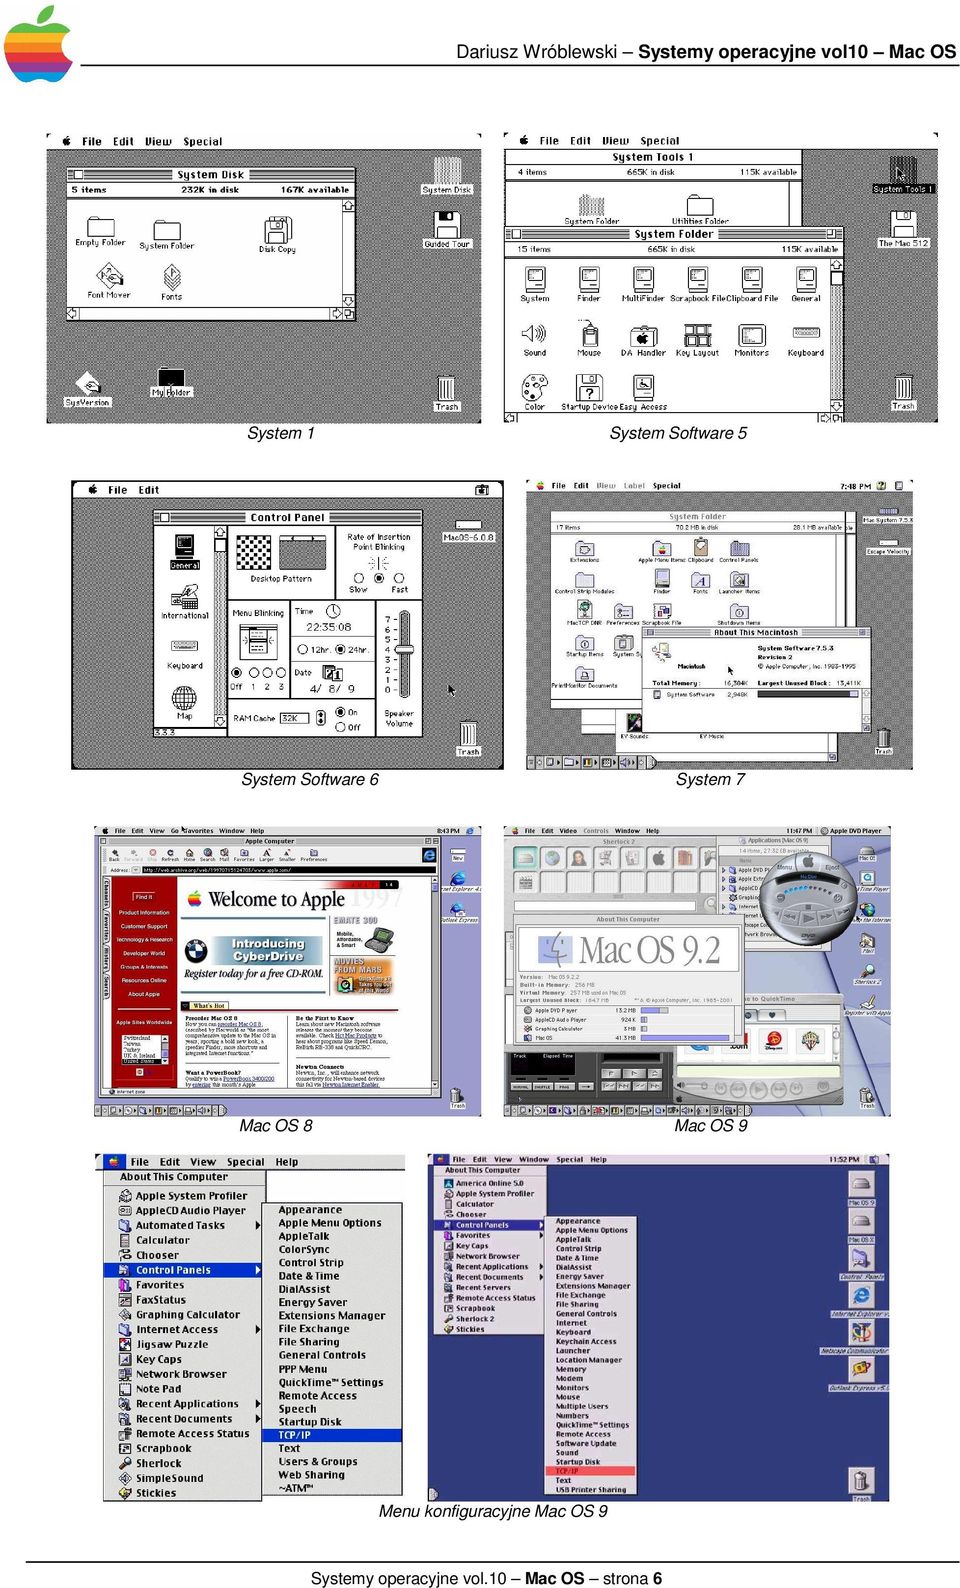 9 Menu konfiguracyjne Mac OS 9